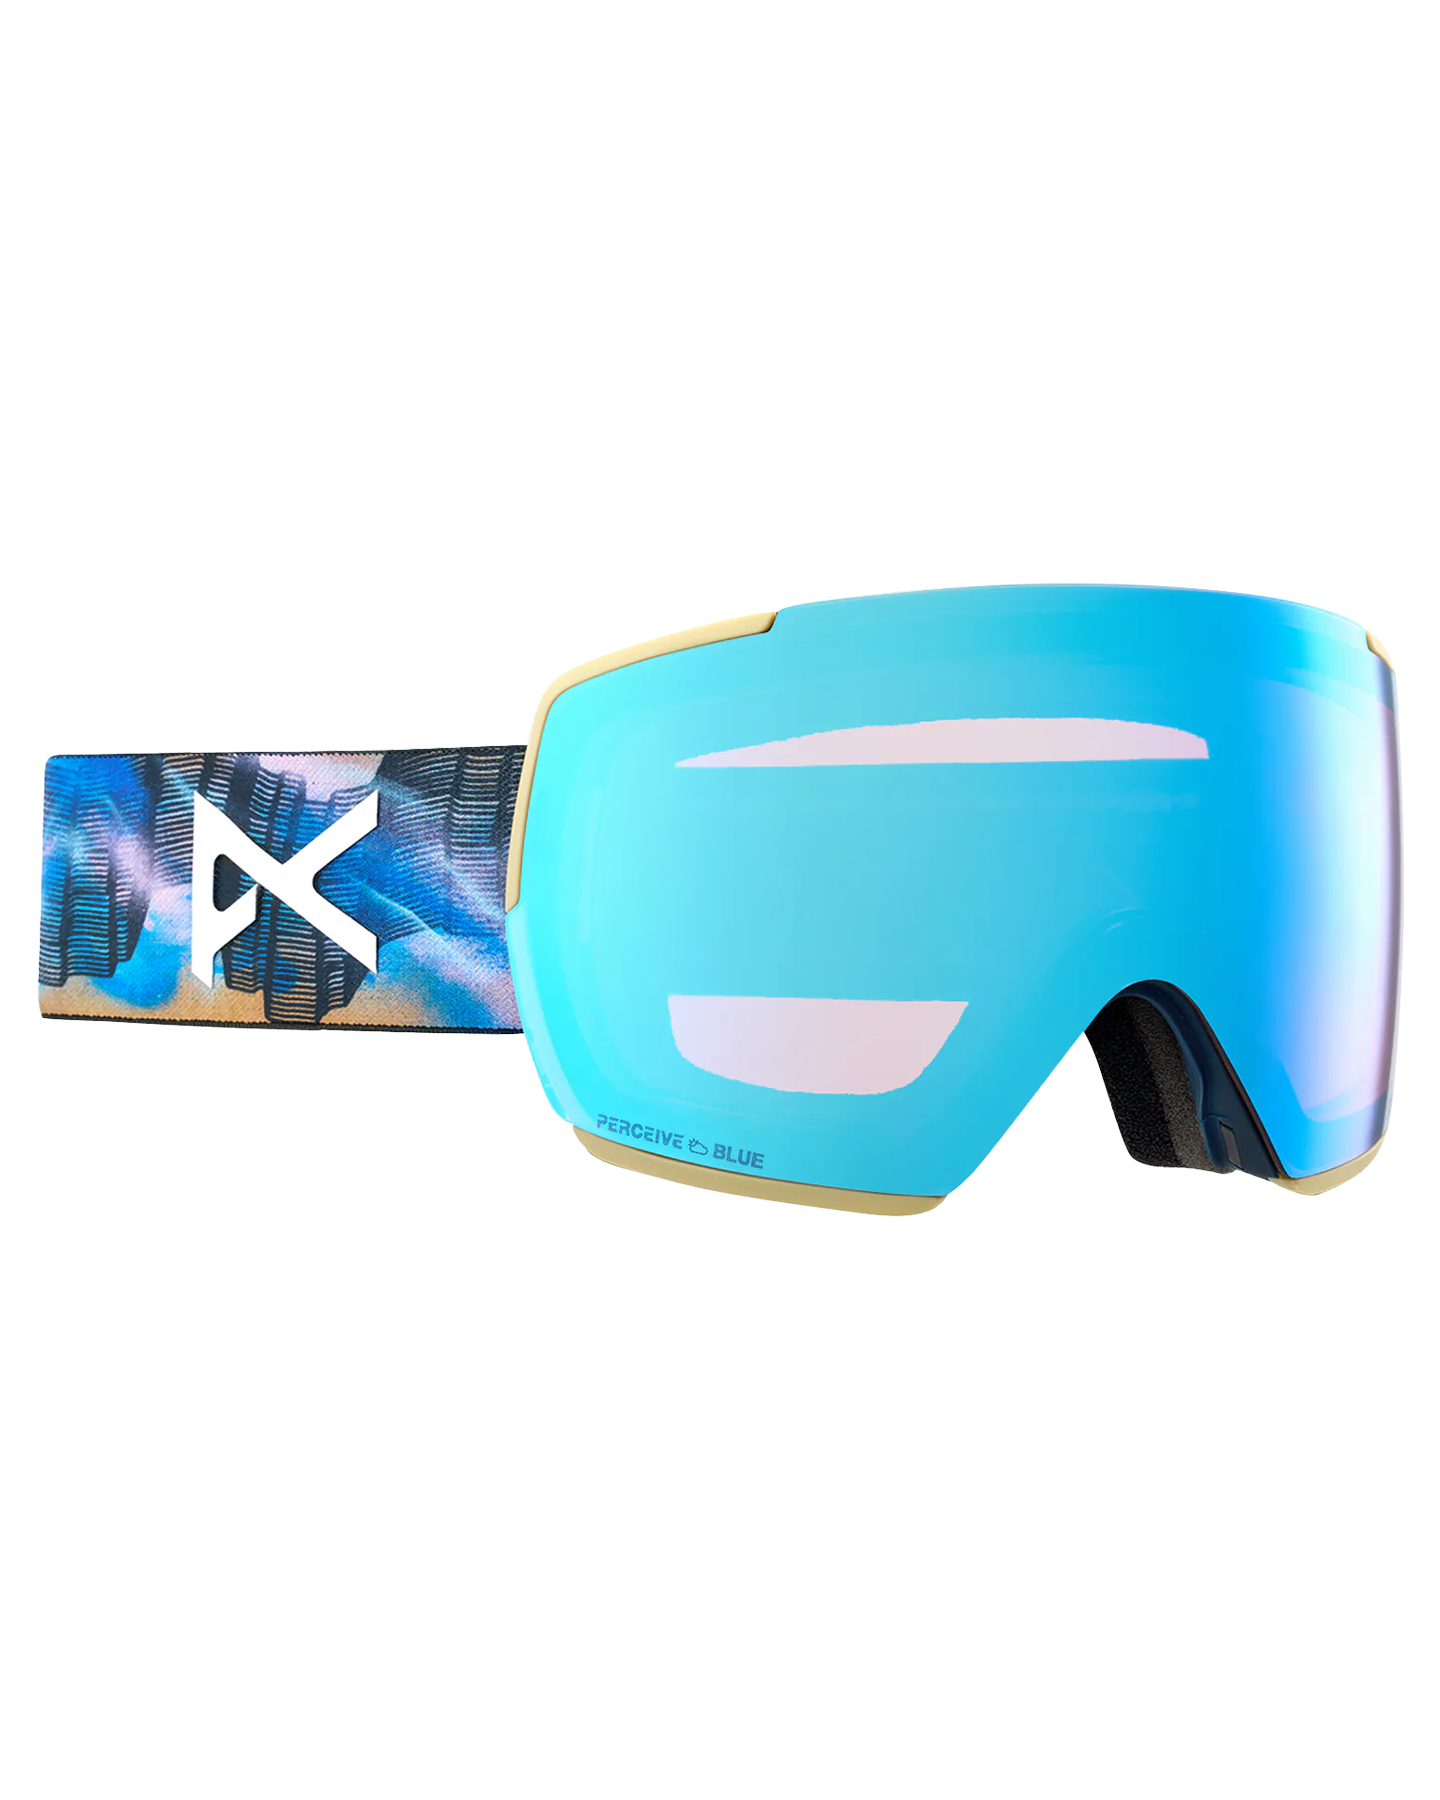 Anon M5 Snow Goggles - Chet Malinow/Perceive Variable Blue Lens Men's Snow Goggles - Trojan Wake Ski Snow